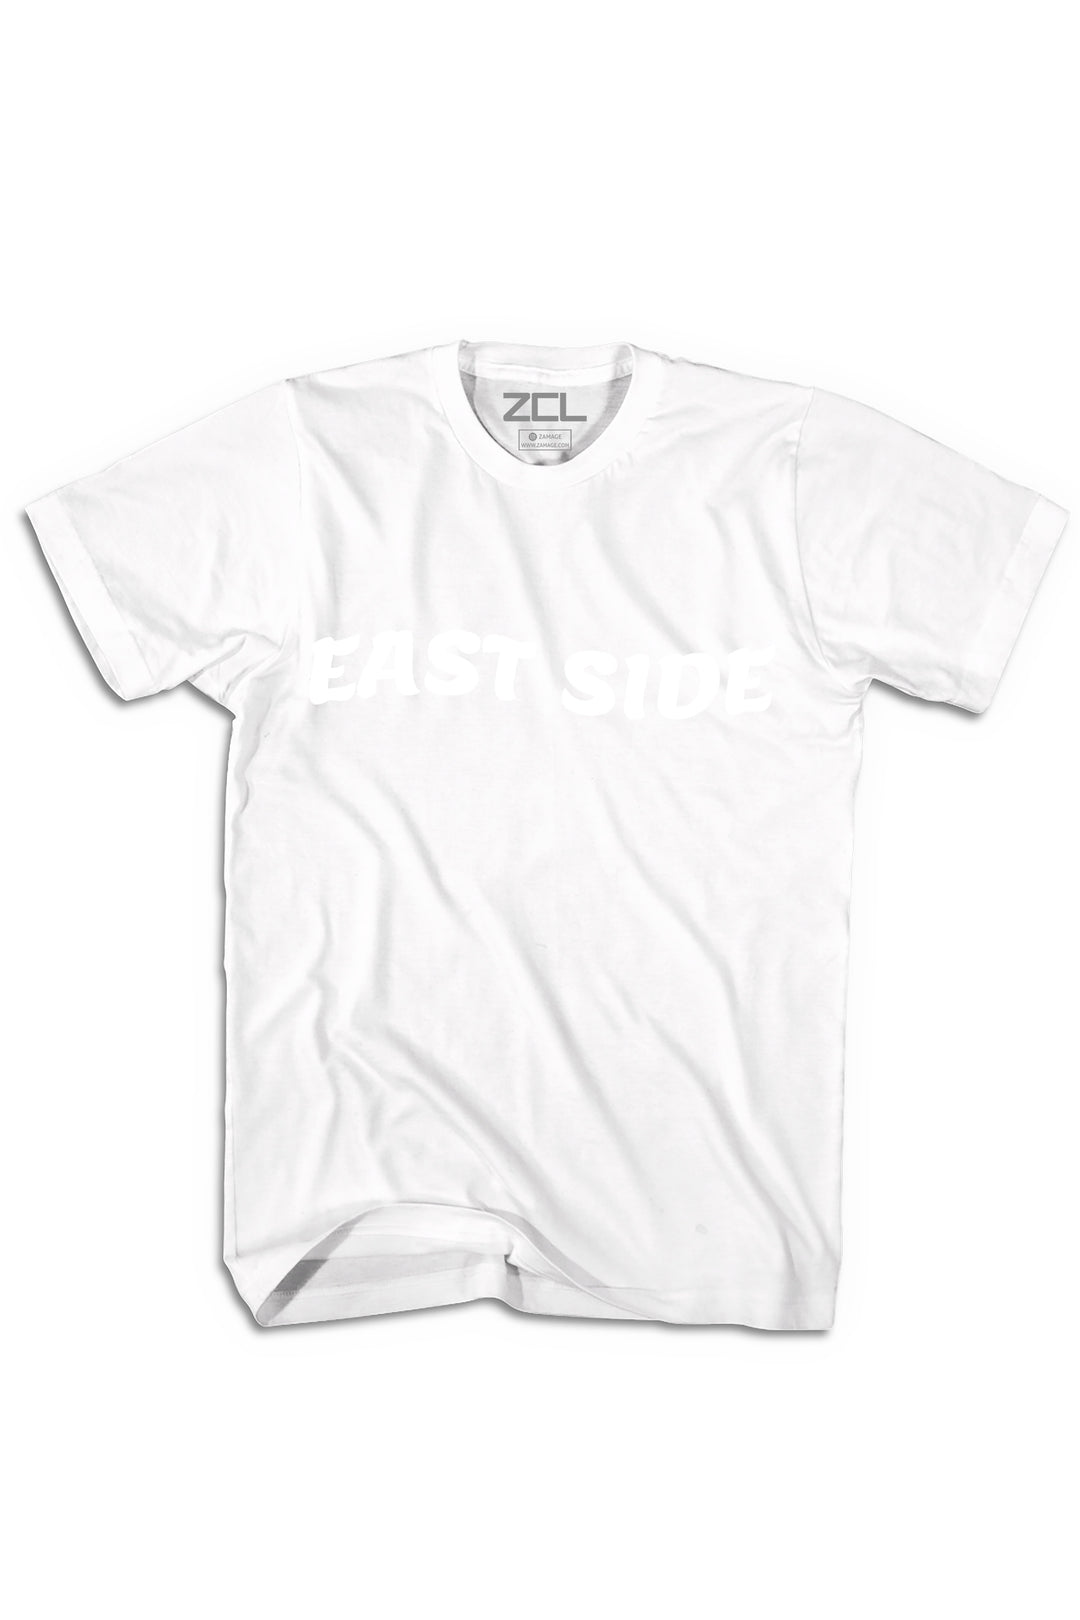 East Side Tee (White Logo) - Zamage